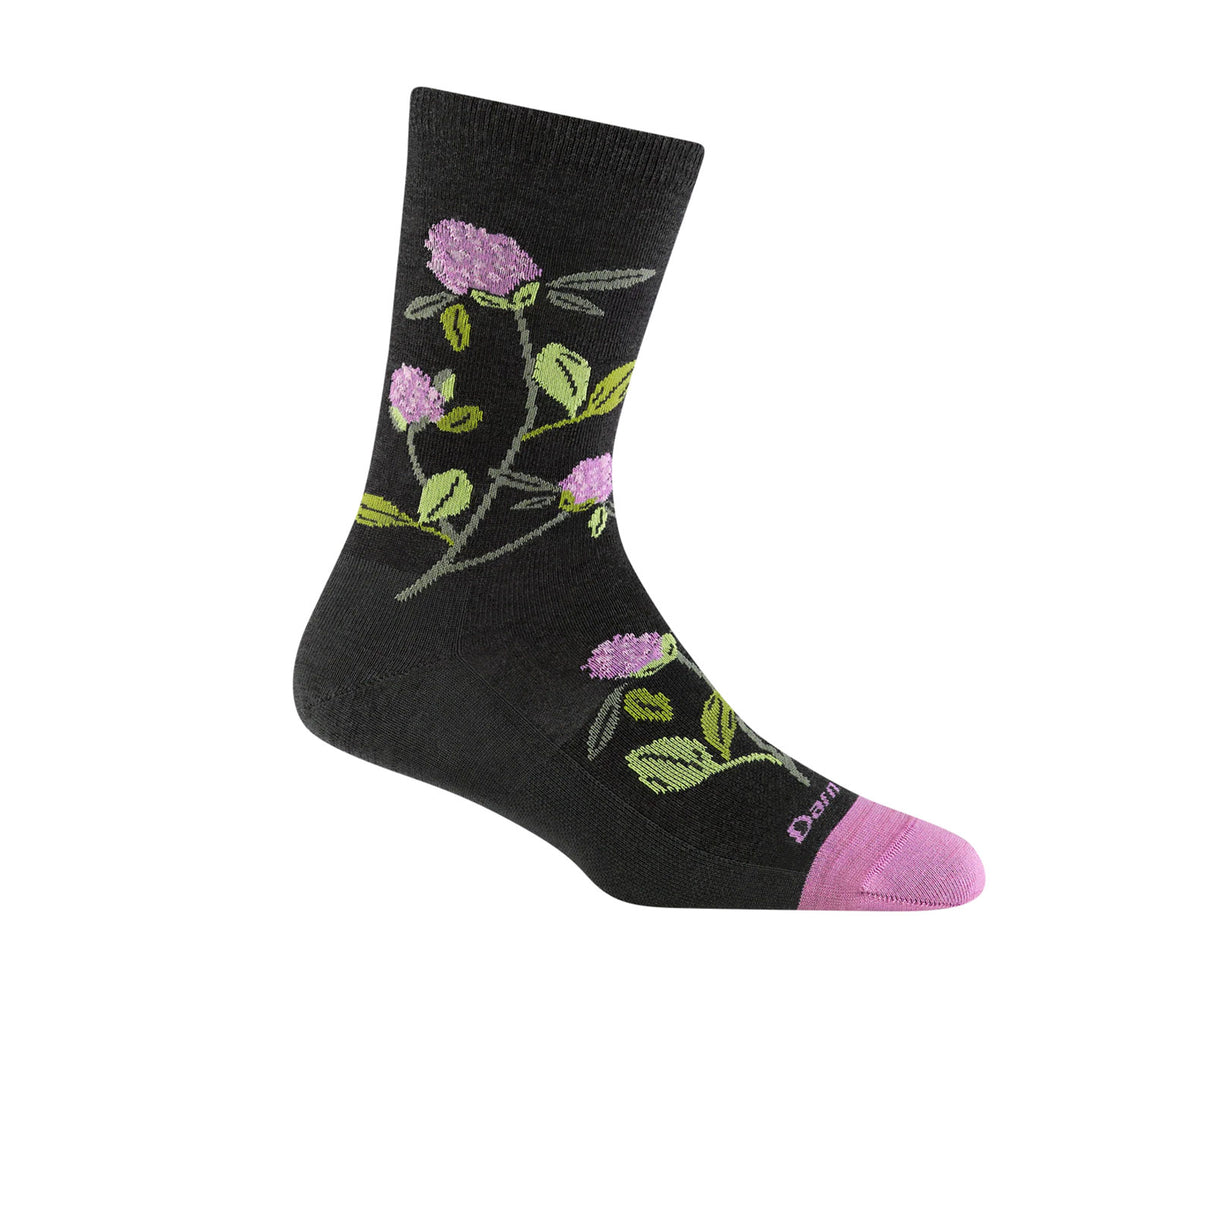 Darn Tough Blossom Lightweight Crew Sock (Women) - Charcoal Socks - Life - Crew - The Heel Shoe Fitters